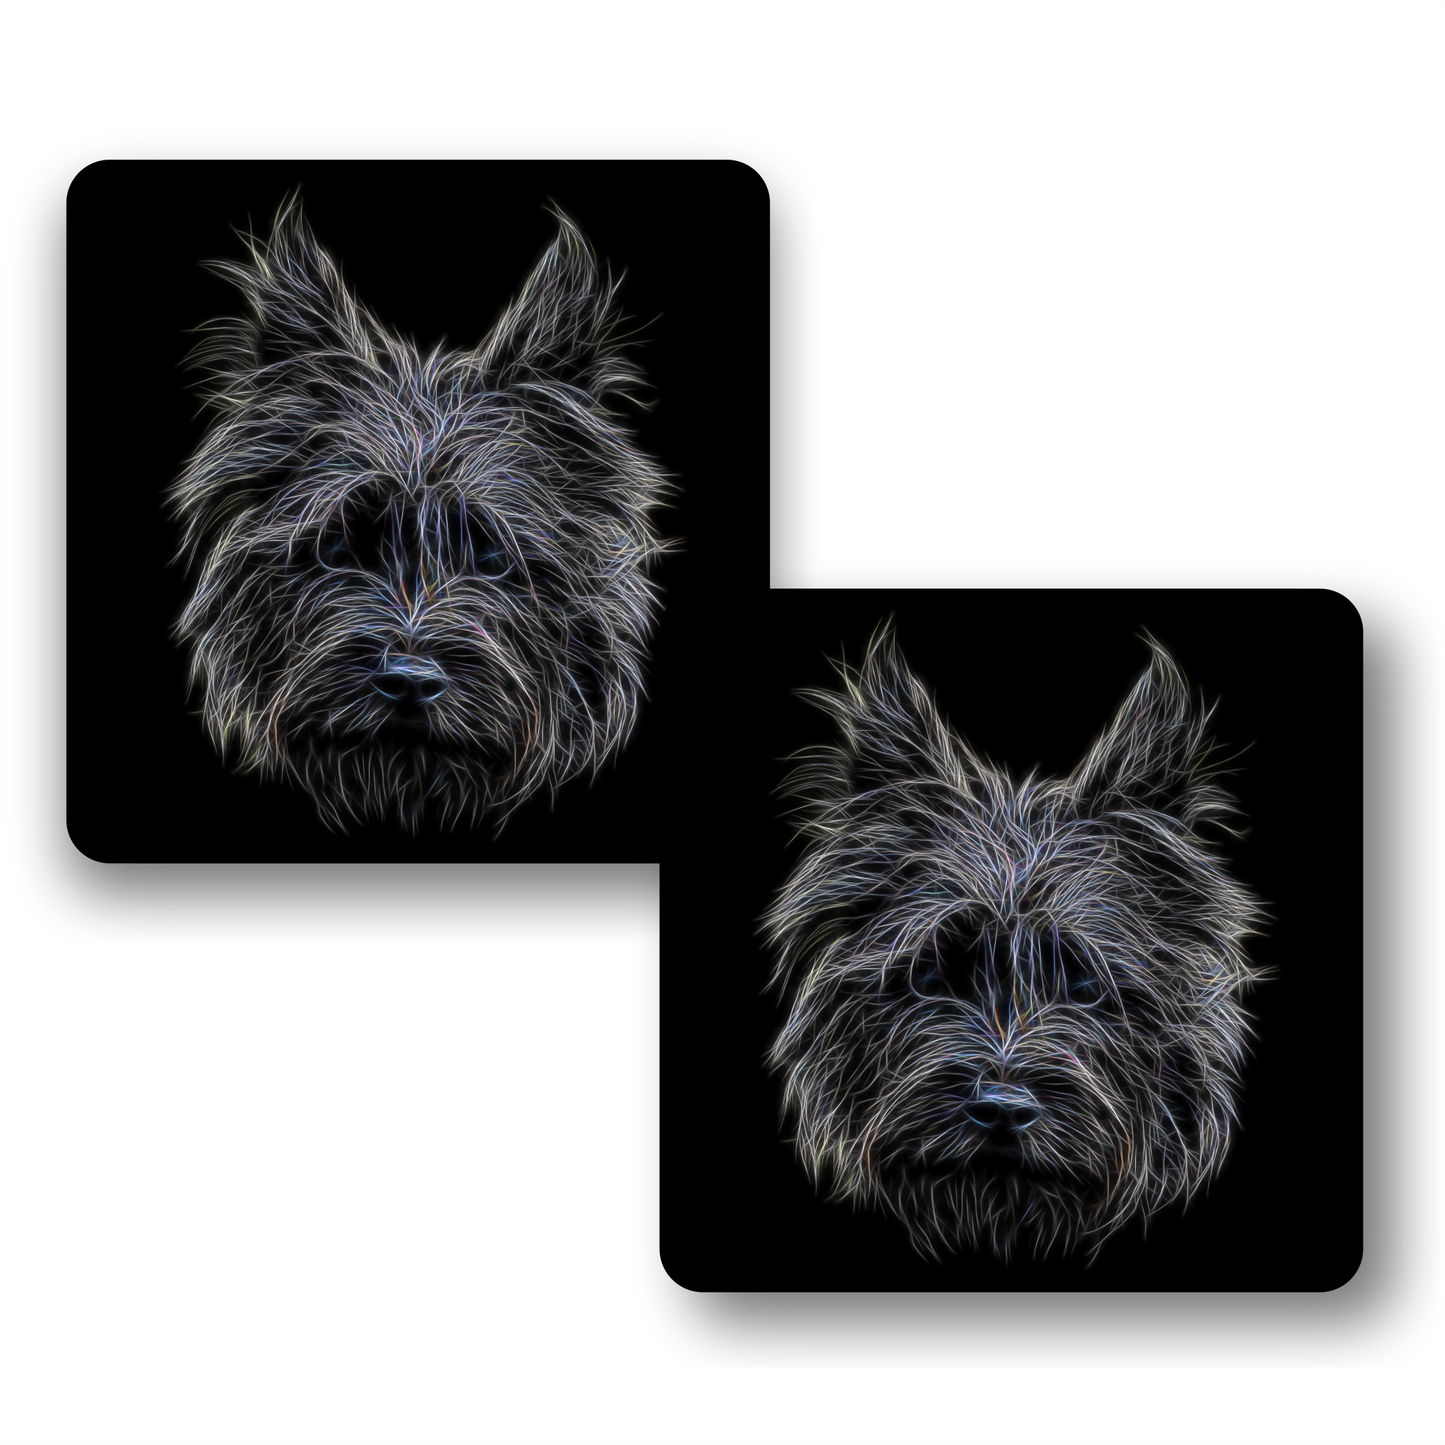 Black Cairn Terrier Coasters, Set of 2, with Stunning Fractal Art Design.